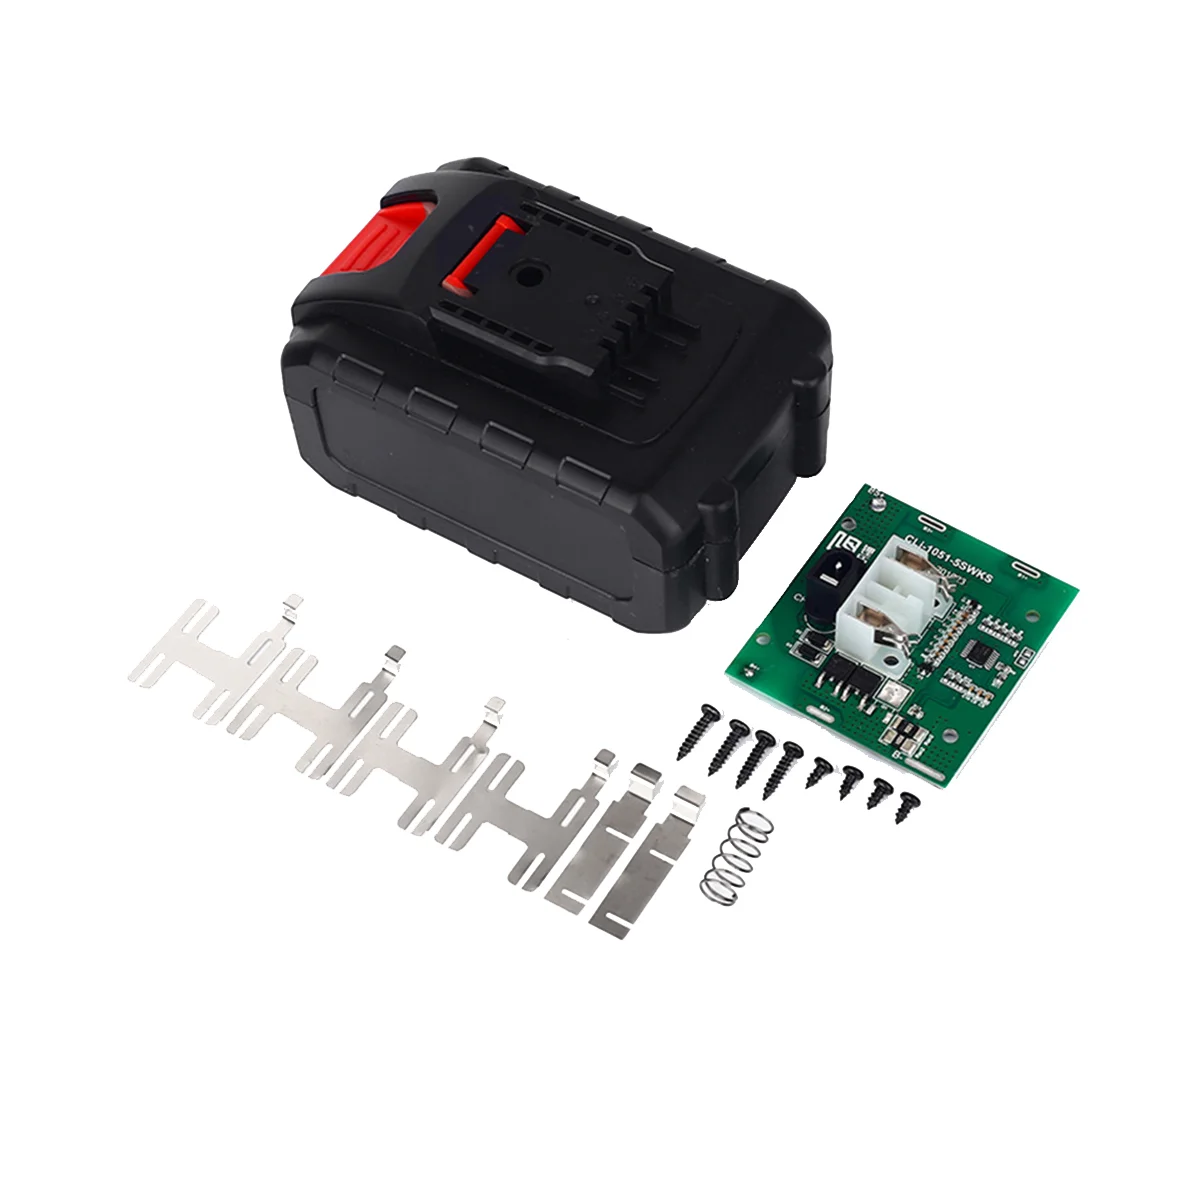 Baterie Plastové Pouzdro+Lithium Baterie Ochranné Desky pro Worx 10-článkovou Baterií Tool Battery Case Circuit Board Kit